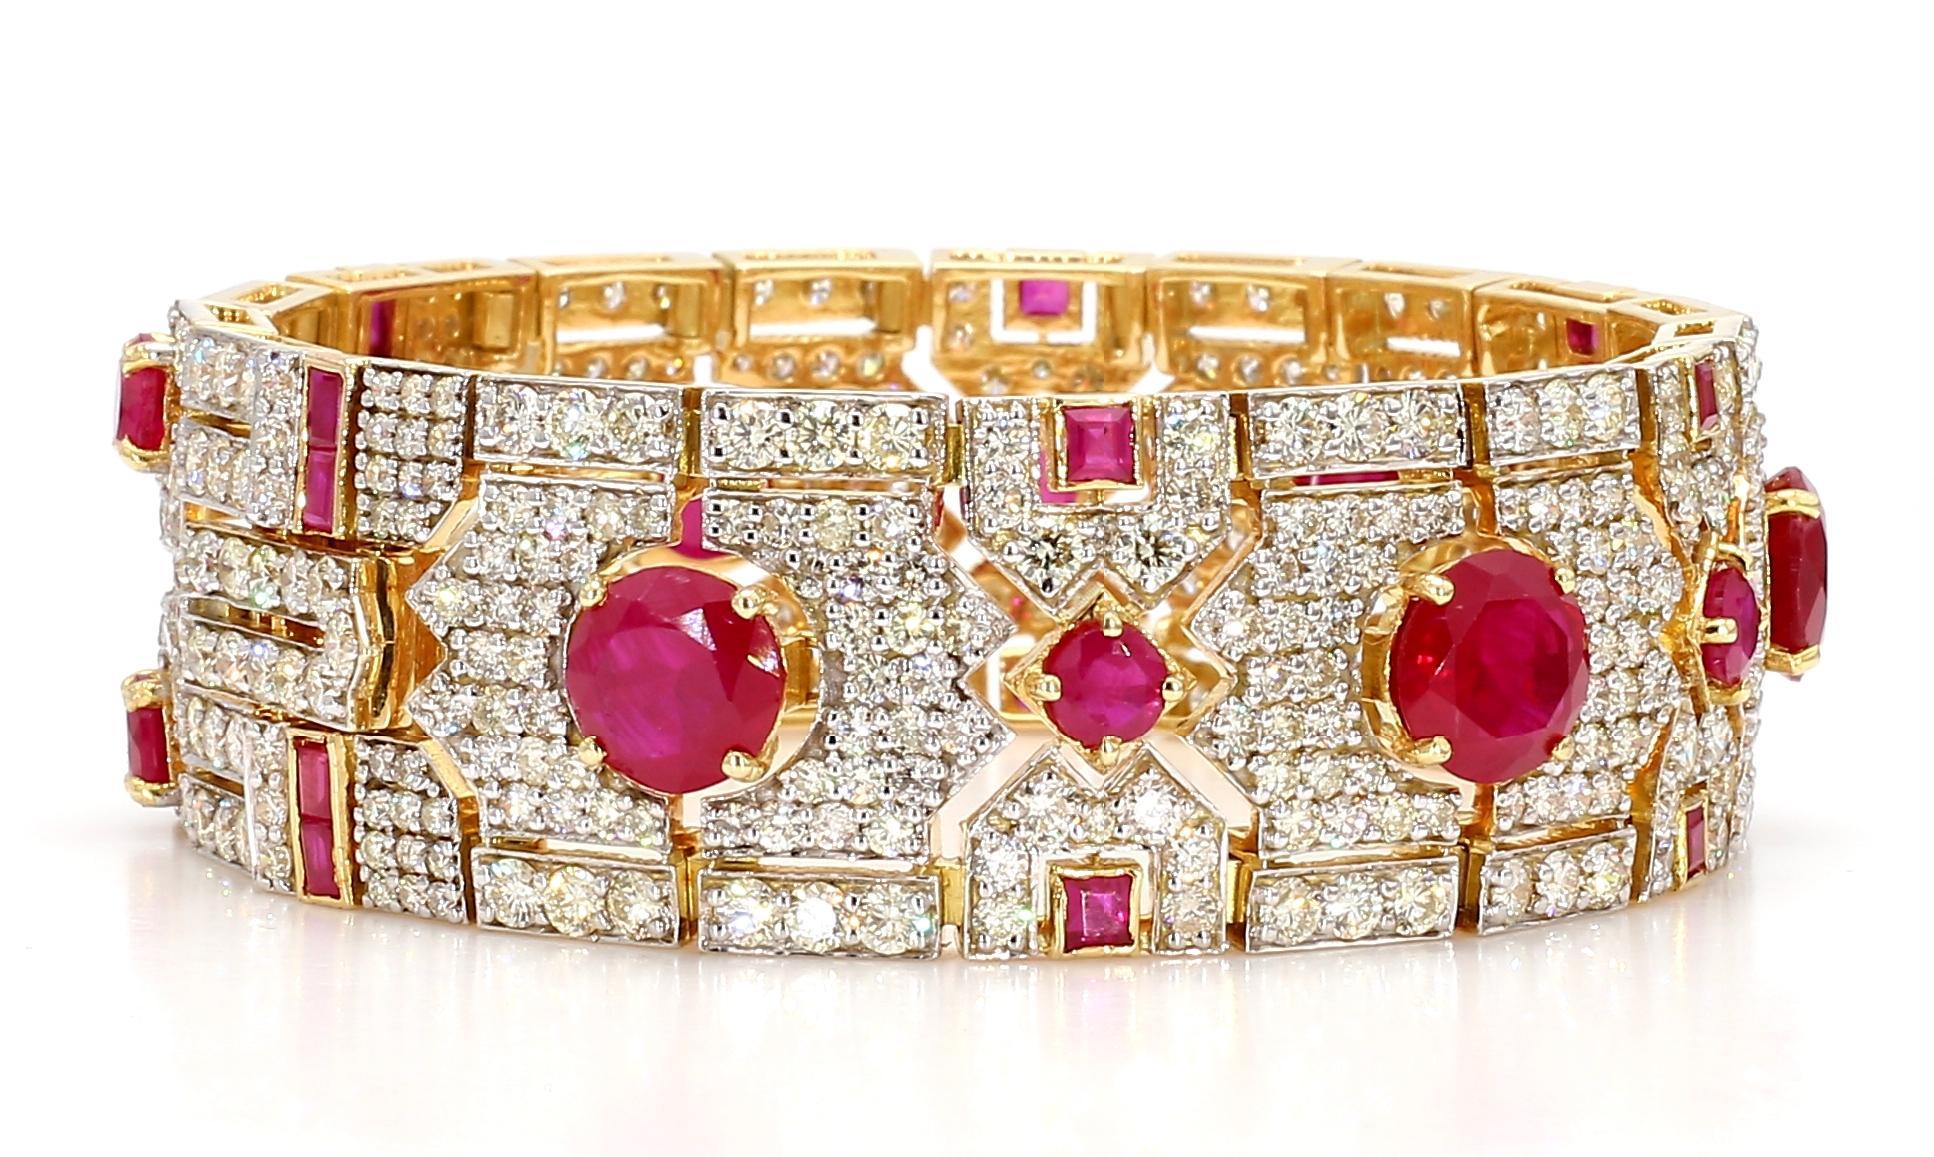 13.25 Carat Diamond 16.59 Carat Ruby Bracelet 18K White Gold For Sale 2